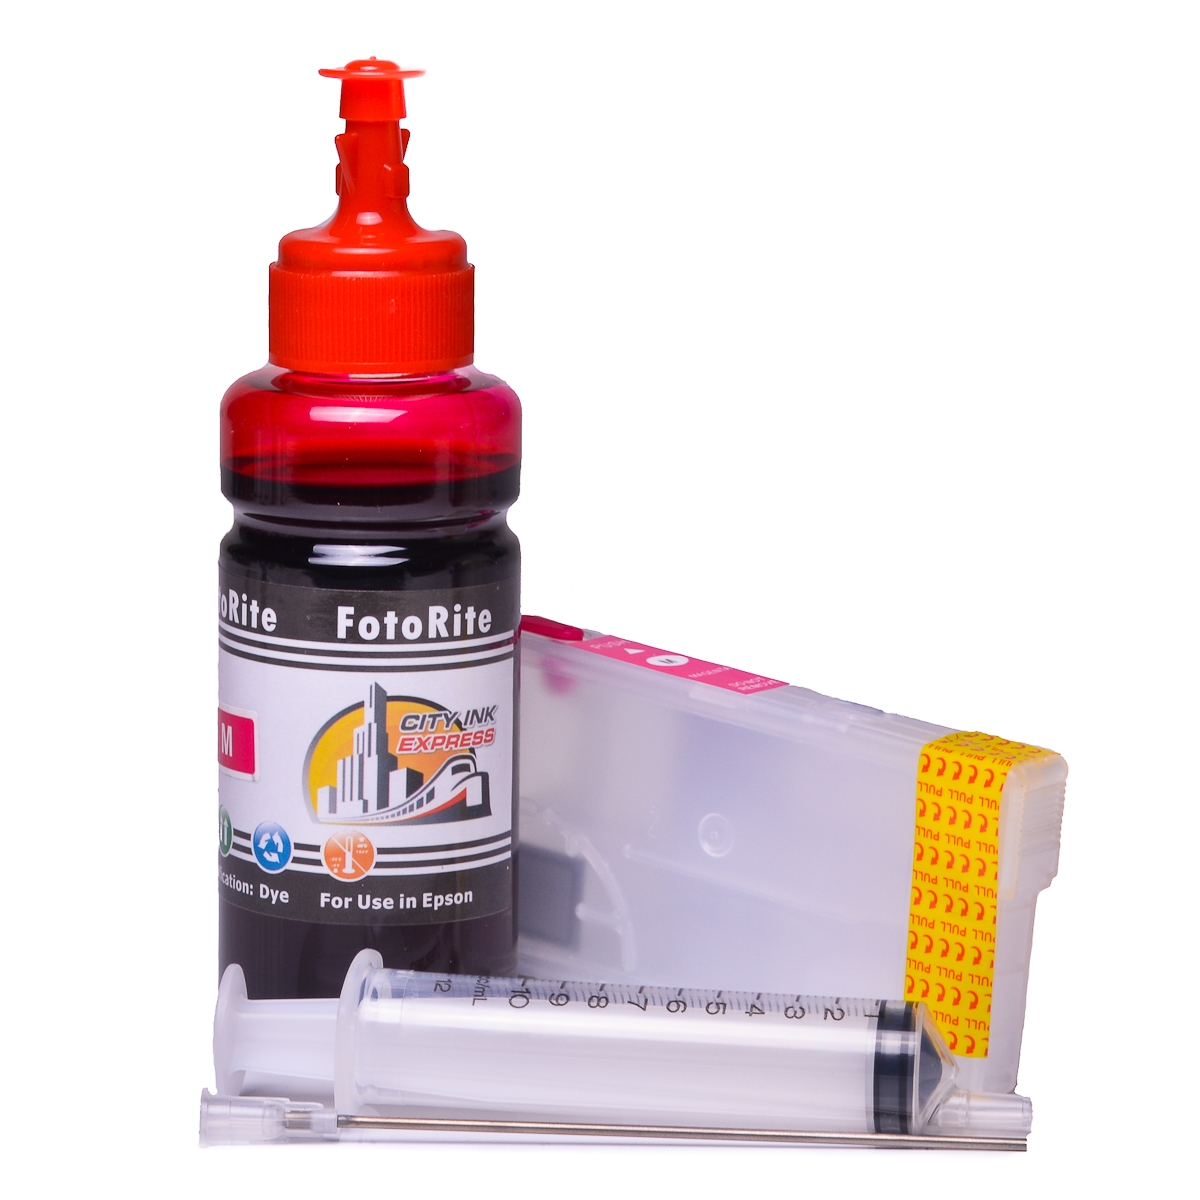 Refillable T3583 - C13T35834010 Magenta Cheap printer cartridges for Epson WF-4730DTWF T3593 - C13T35934010 dye ink